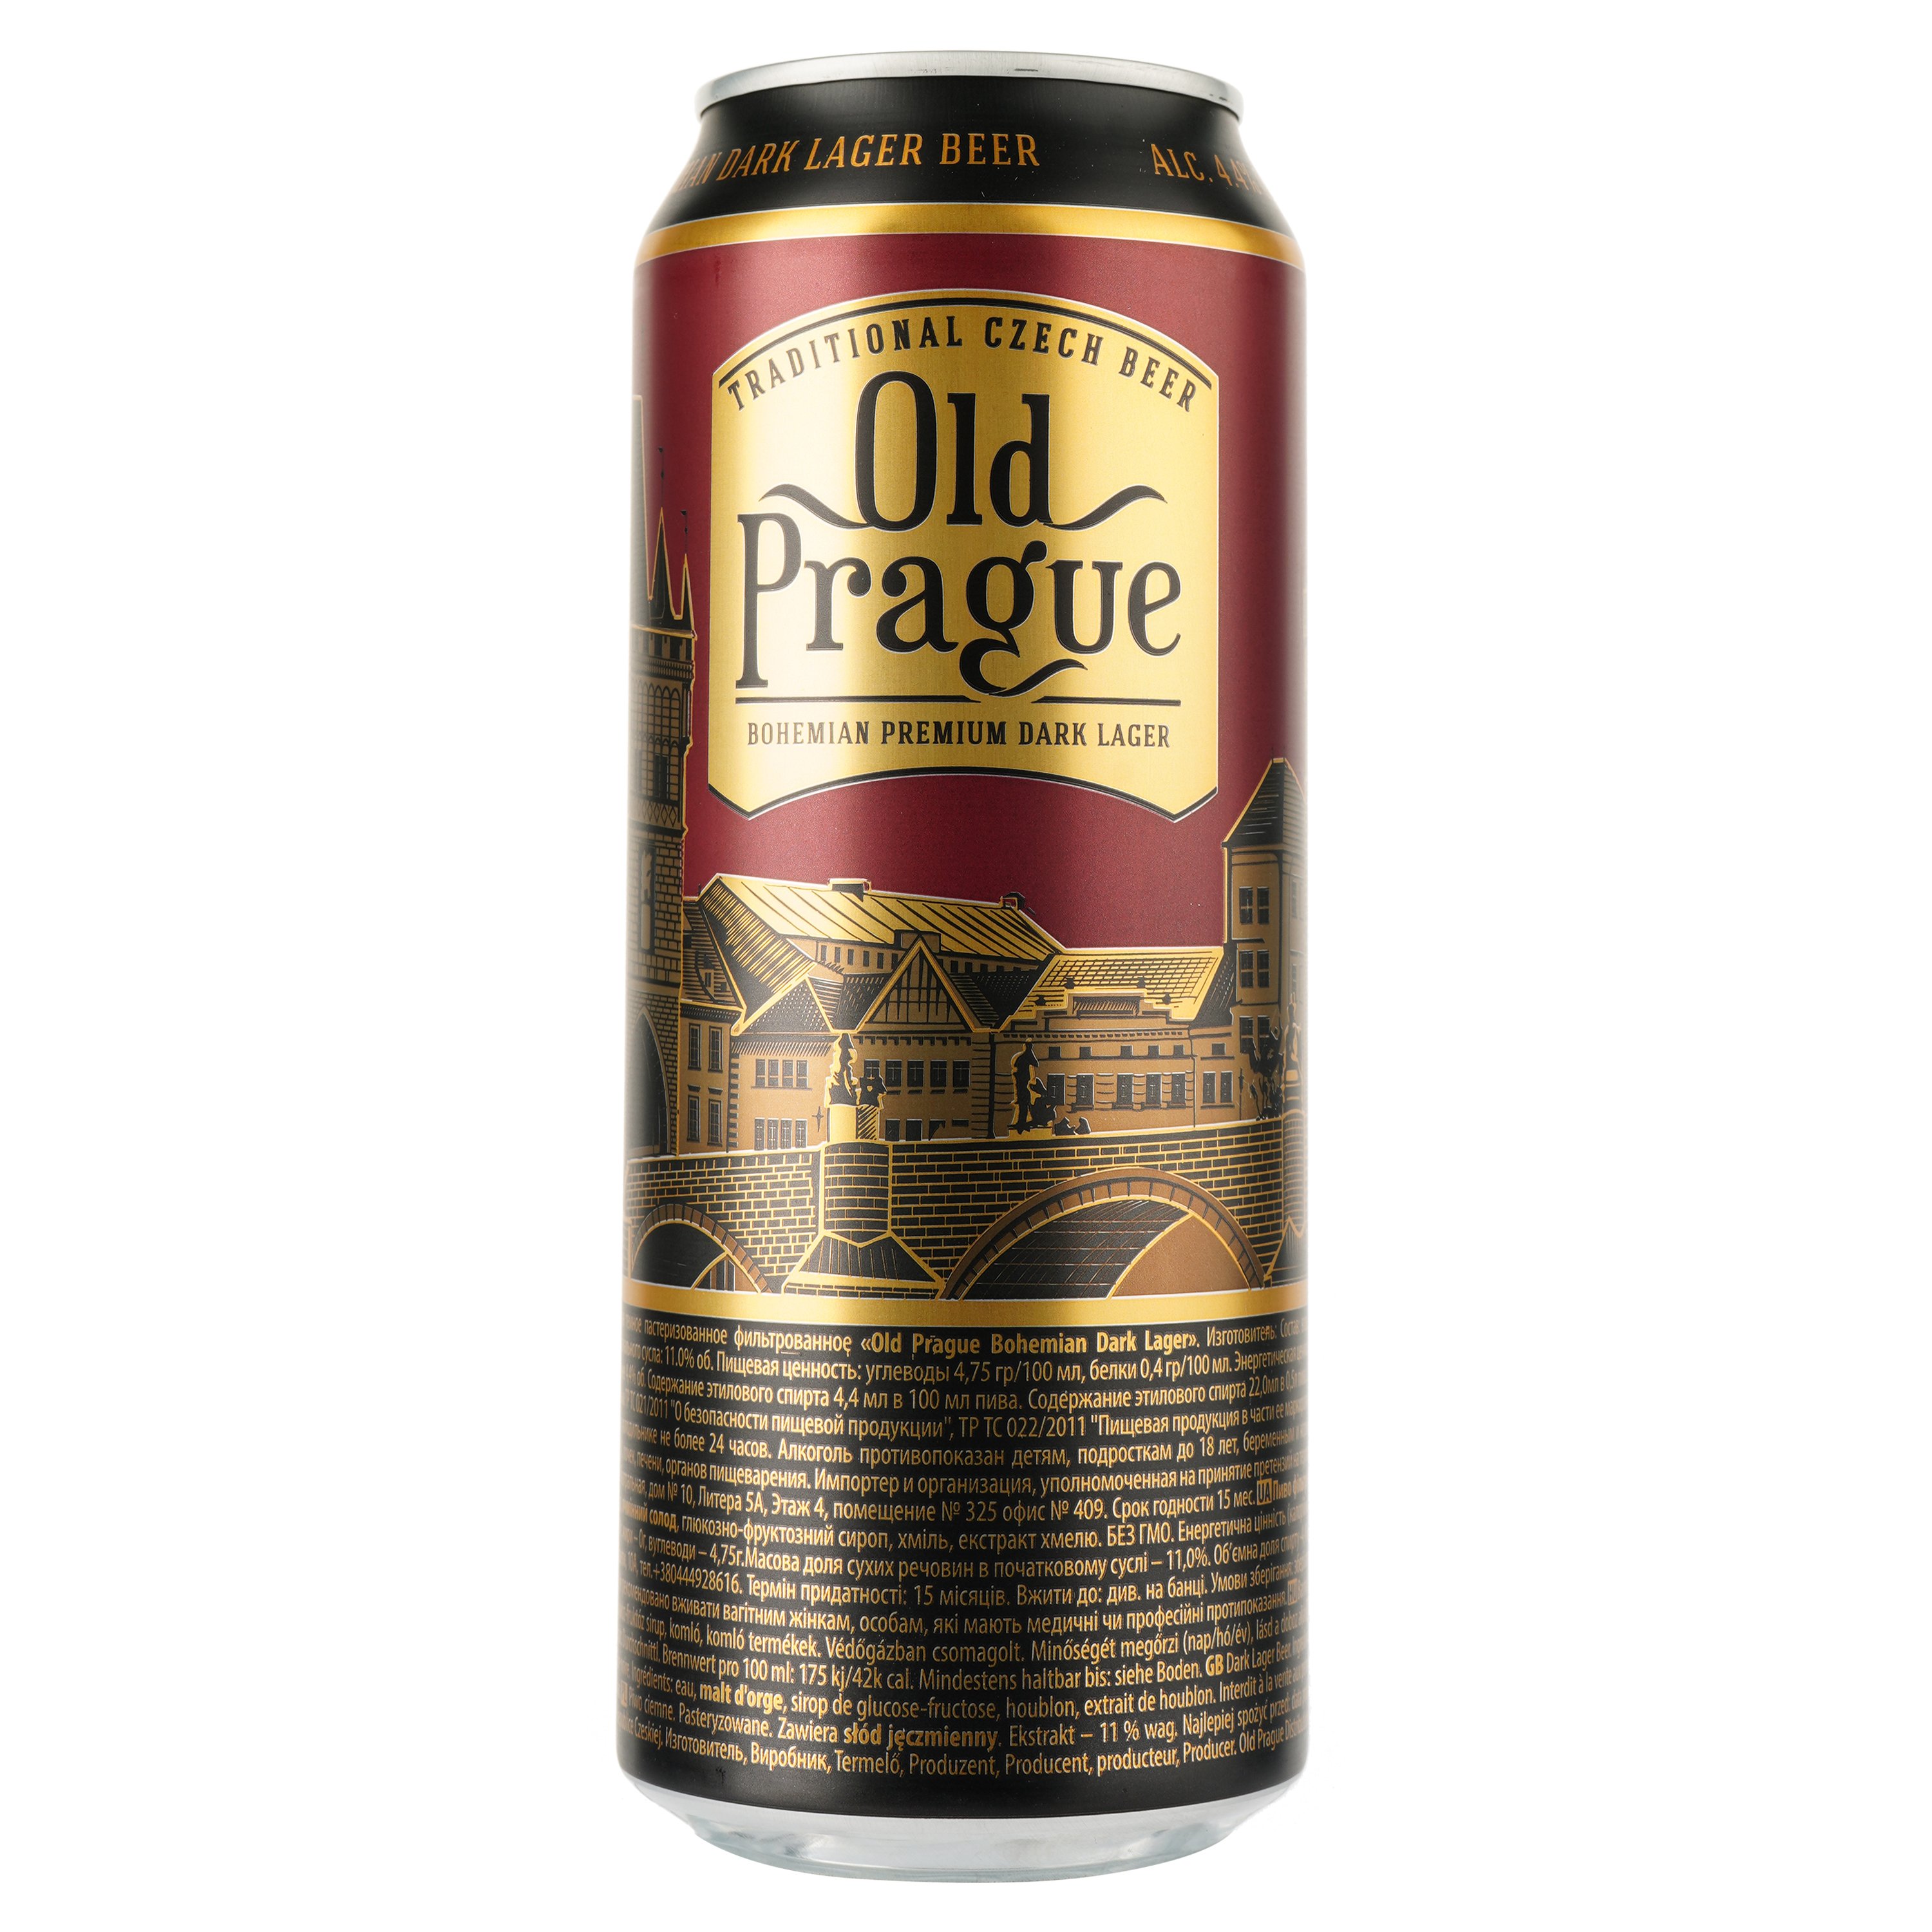 Пиво Old Prague Bohemian Dark Lager, темное, фильтрованное, 4,4%, ж/б, 0,5 л - фото 1